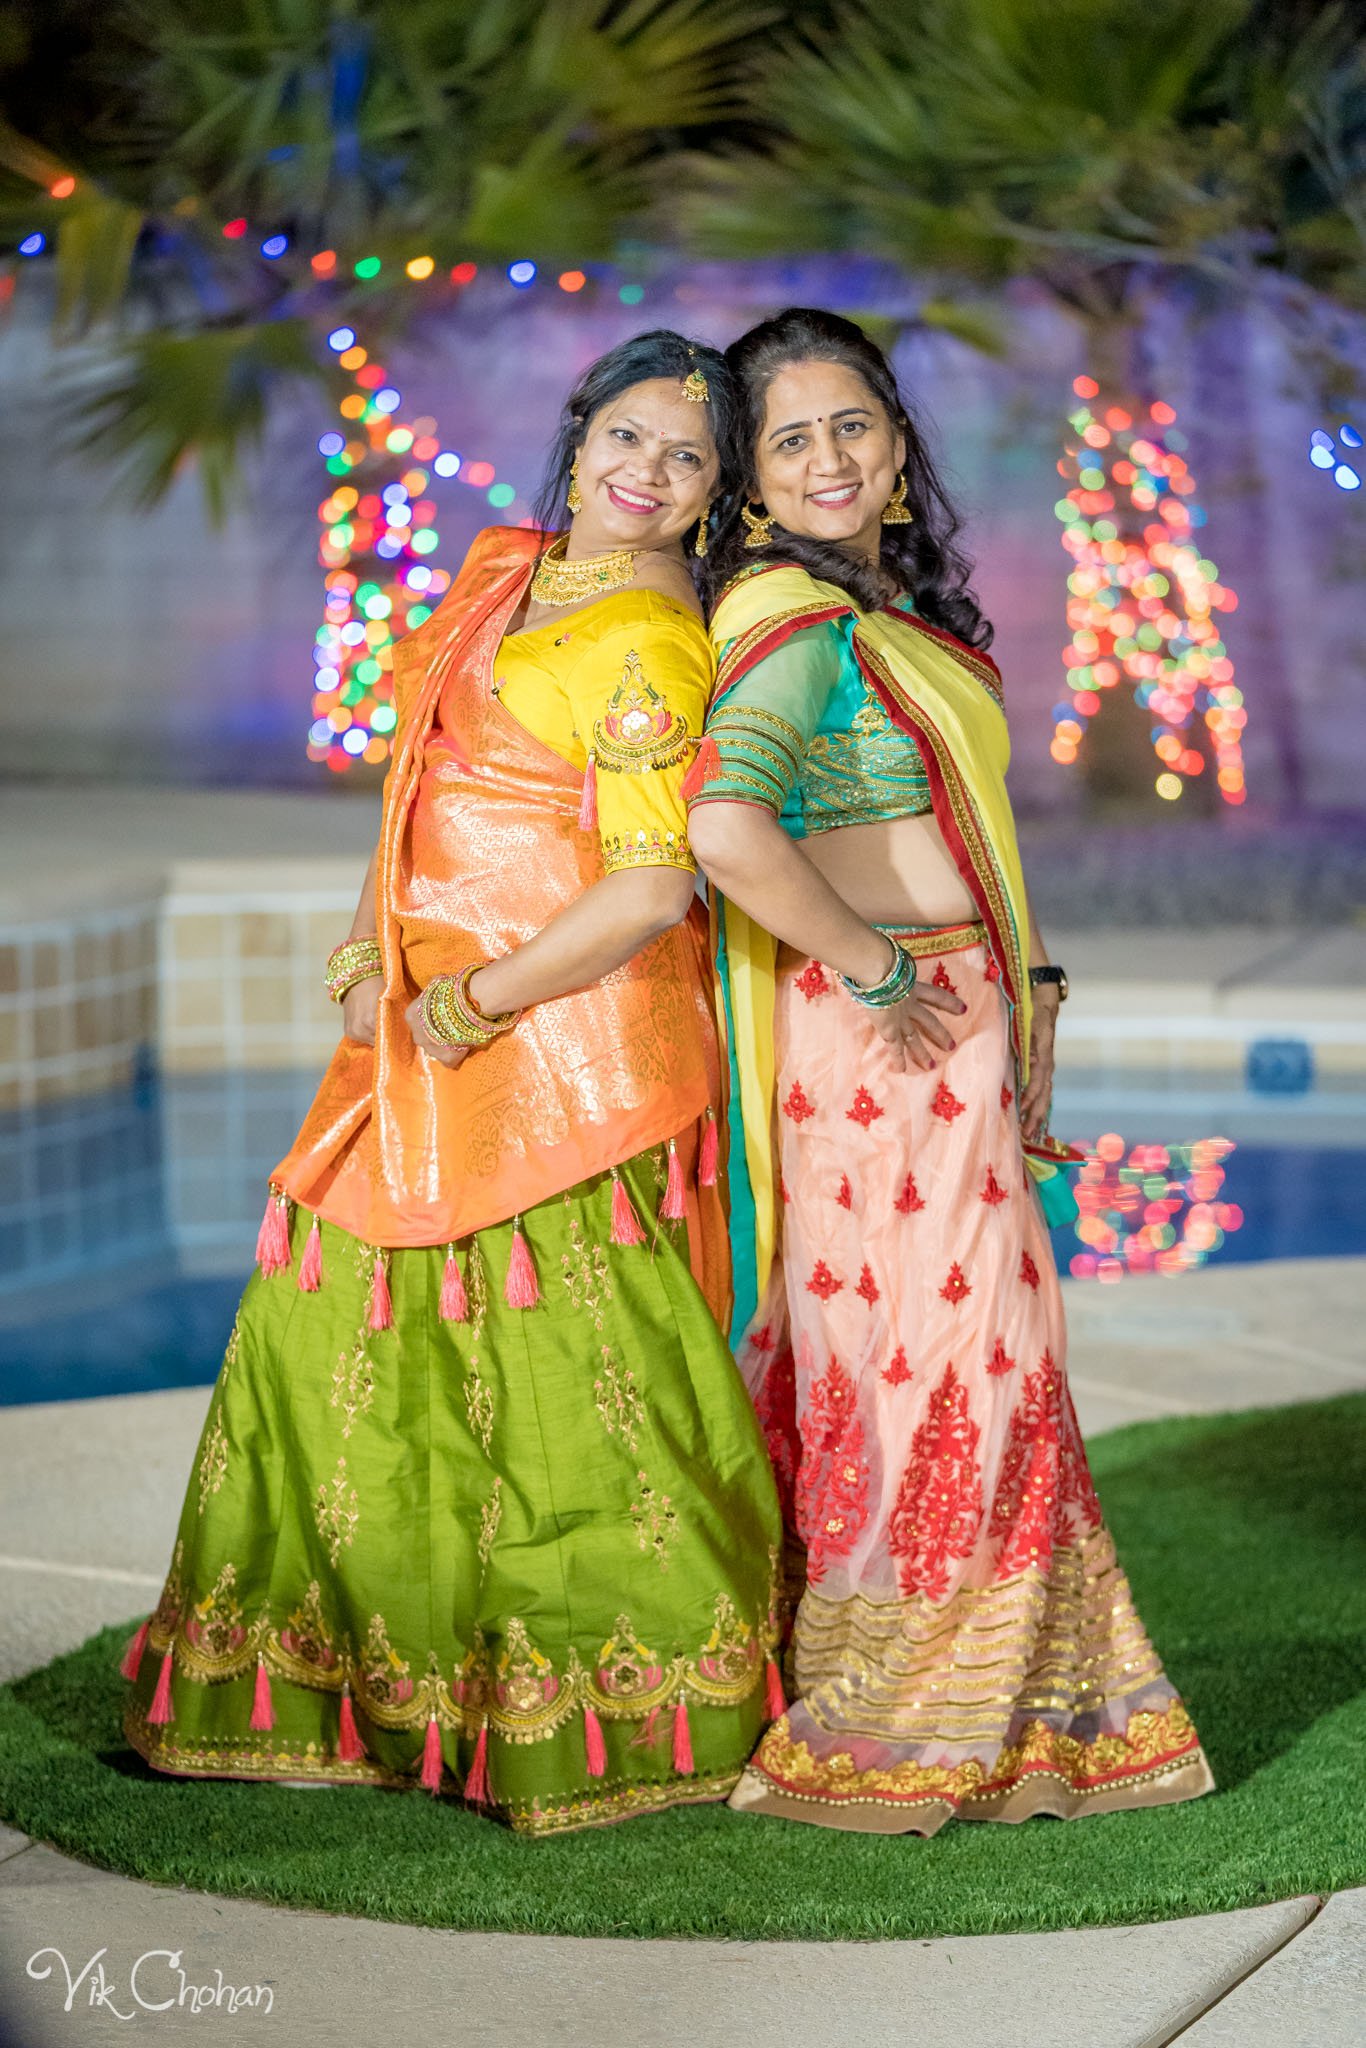 2022-02-04-Hely-&-Parth-Garba-Night-Indian-Wedding-Vik-Chohan-Photography-Photo-Booth-Social-Media-VCP-211.jpg